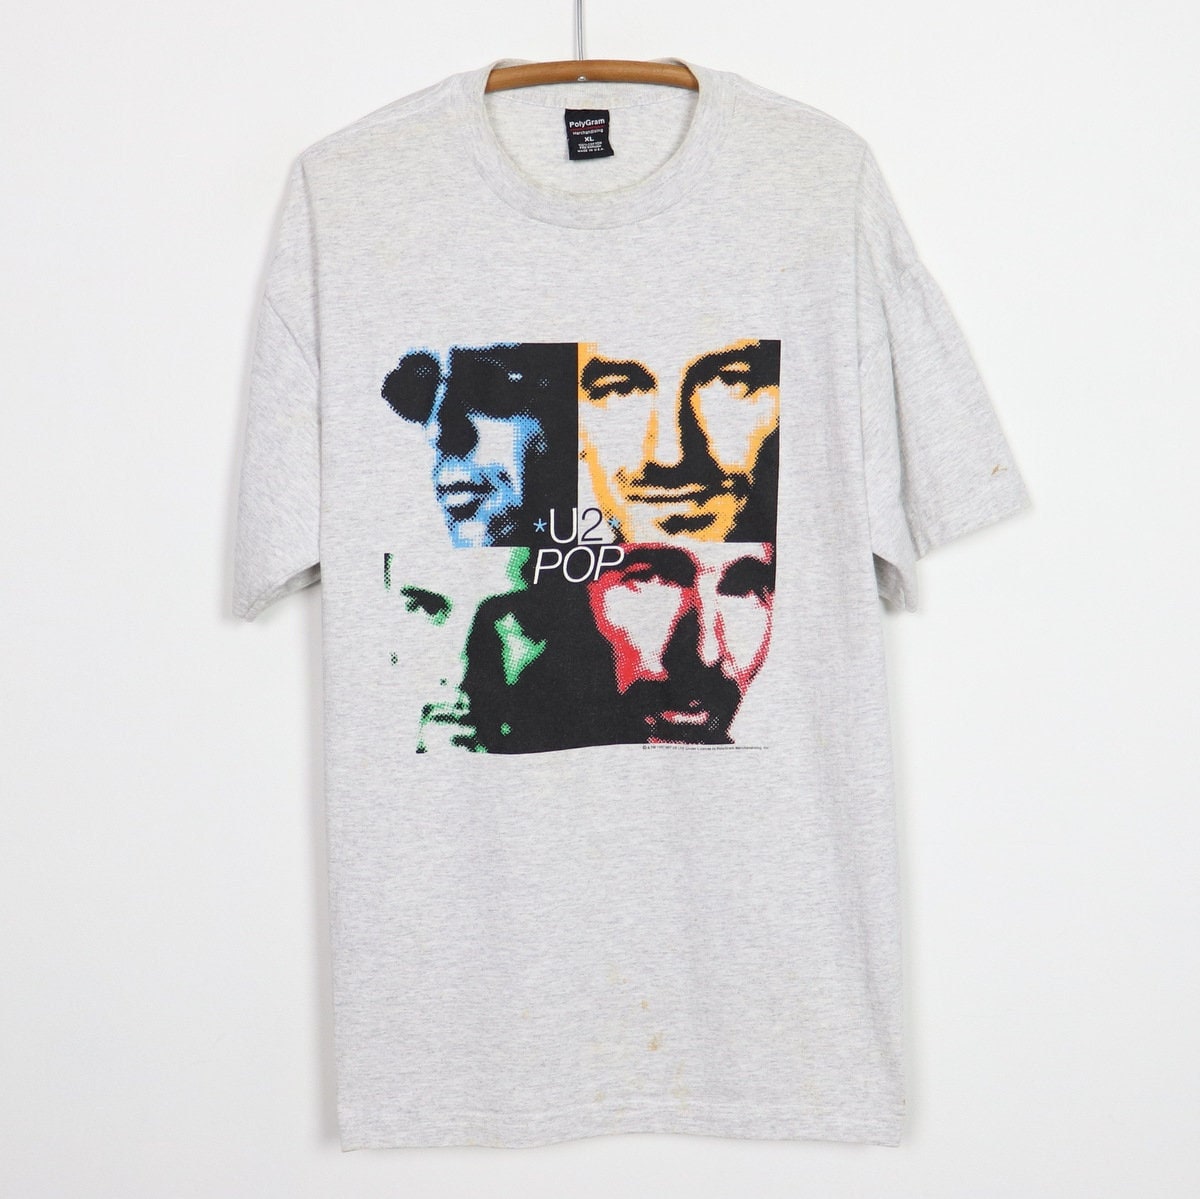 Vintage 1997 U2 Shirt - Etsy